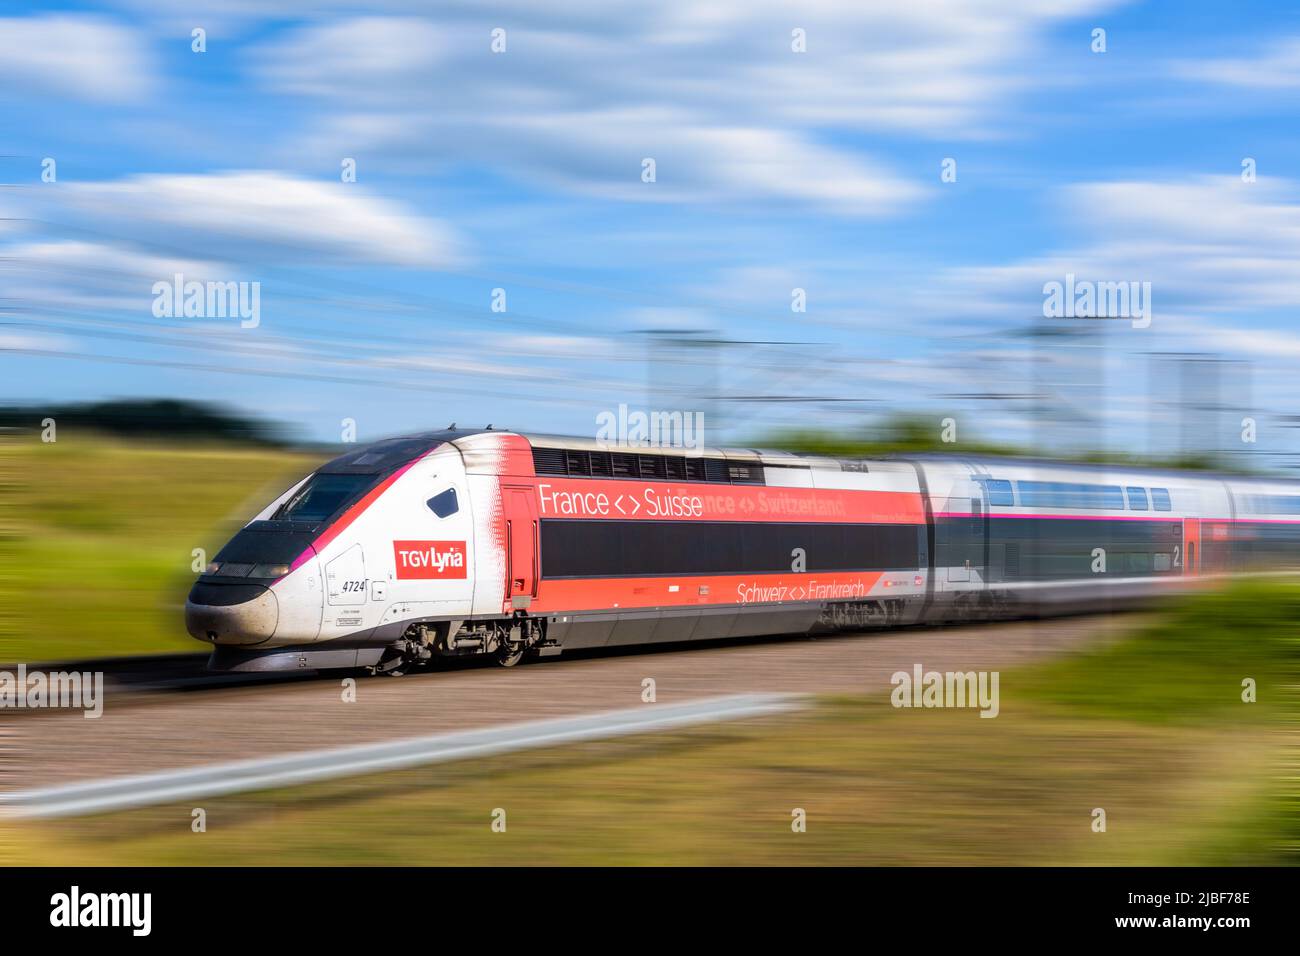 A TGV Euroduplex high speed train from franco-swiss rail company Lyria